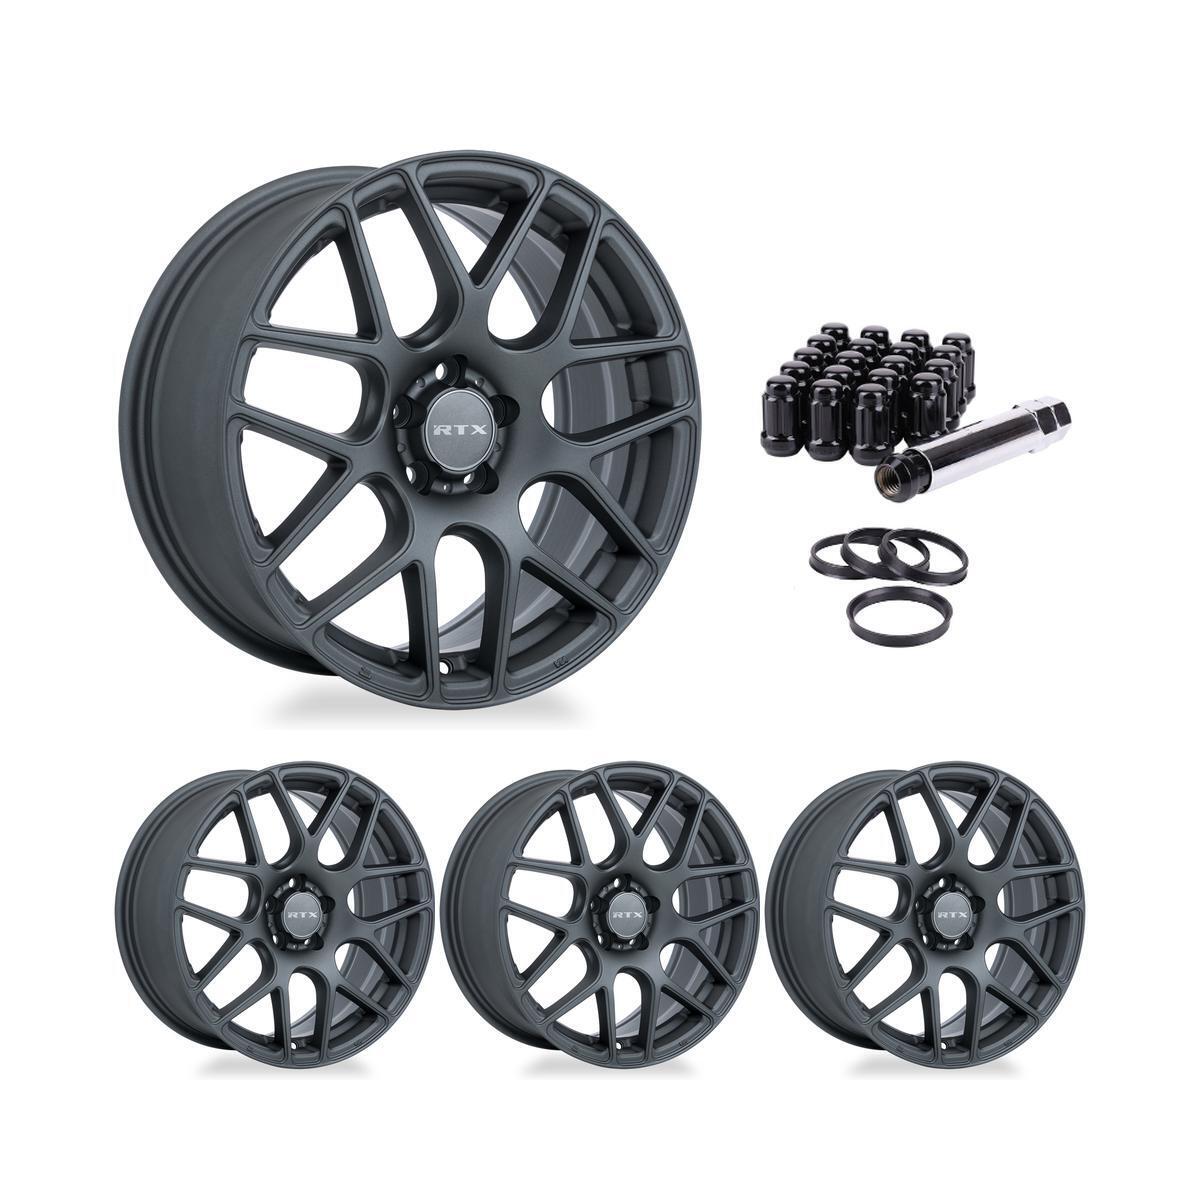 Wheel Rims Set with Black Lug Nuts Kit for 95-05 Pontiac Sunfire P889437 16 inch